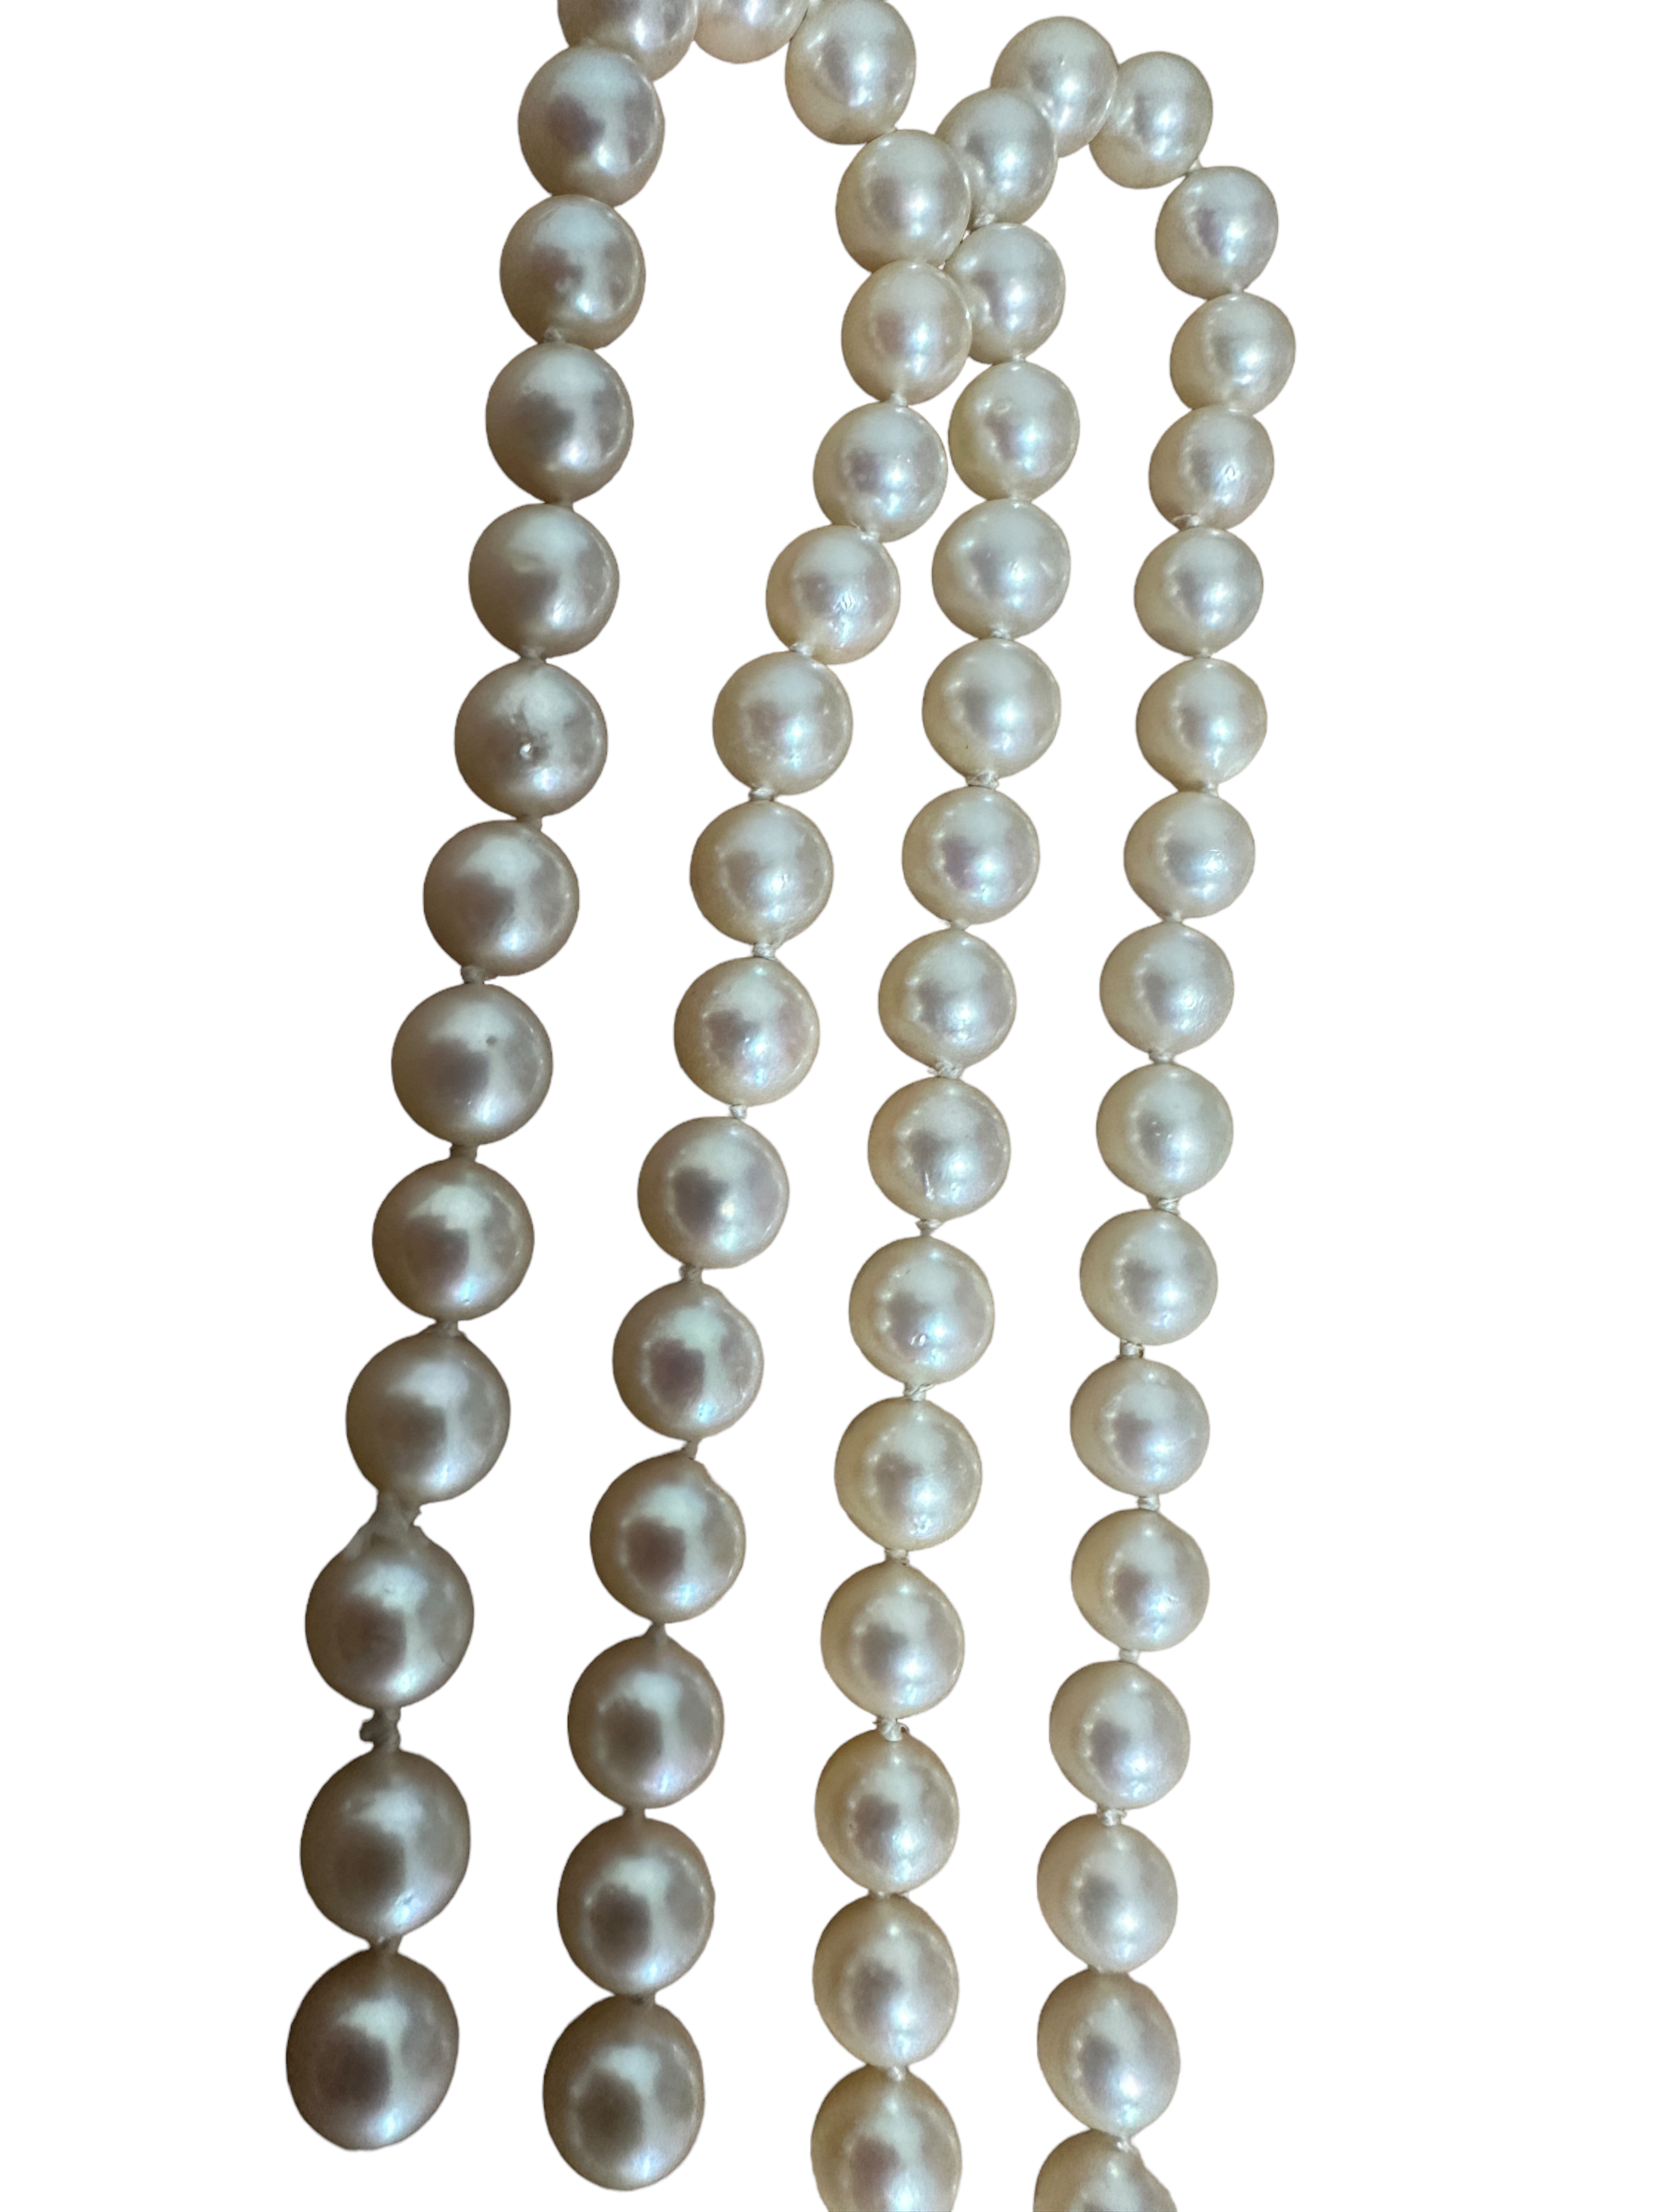 Large String of Vintage Pearls - 150cm in length - pearls average 7mm diameter. - Image 2 of 4